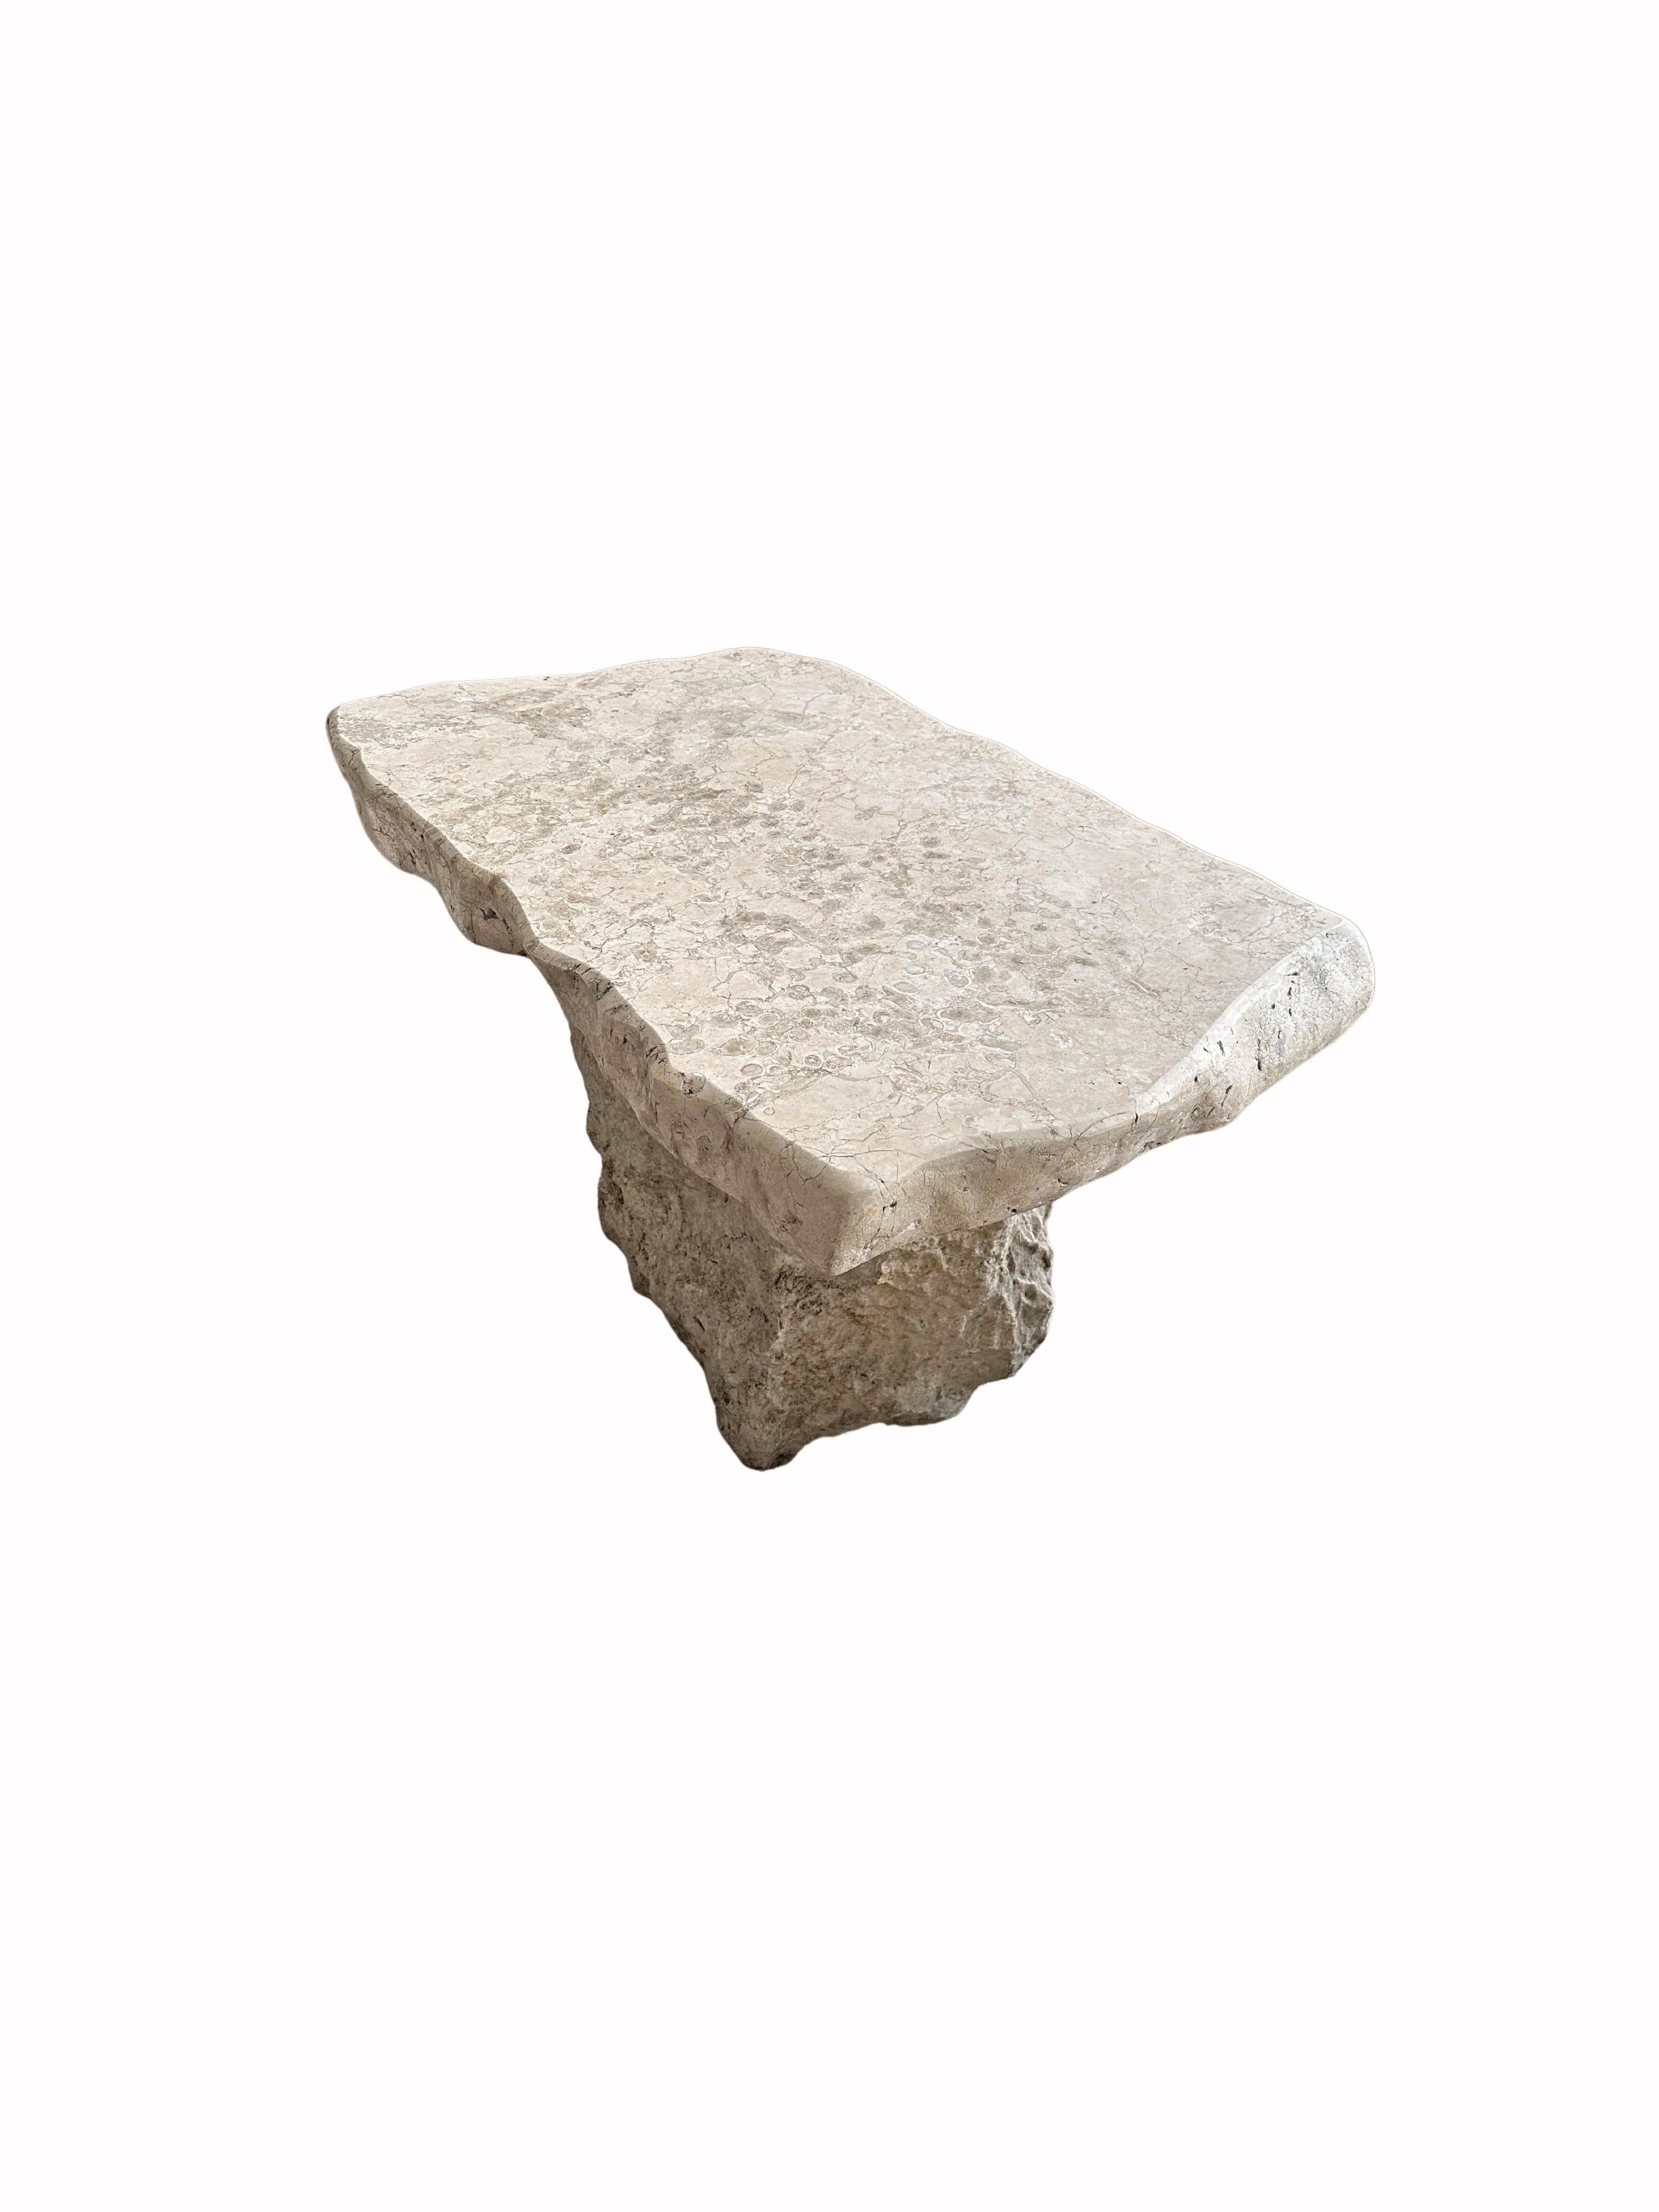 Sculptural Marble Table, Modern Organic 3